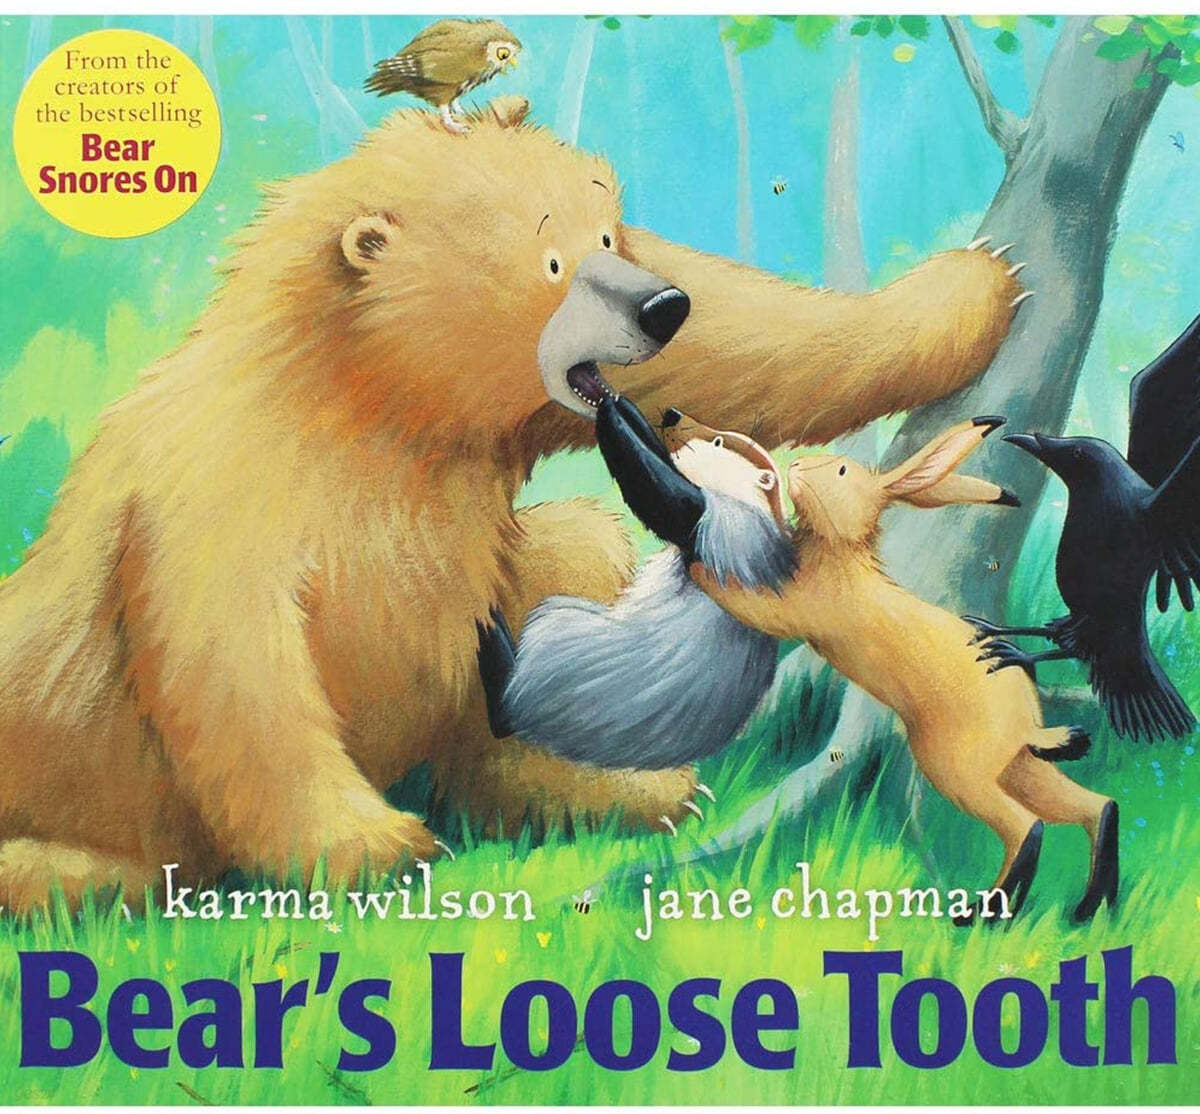 Bears loose tooth